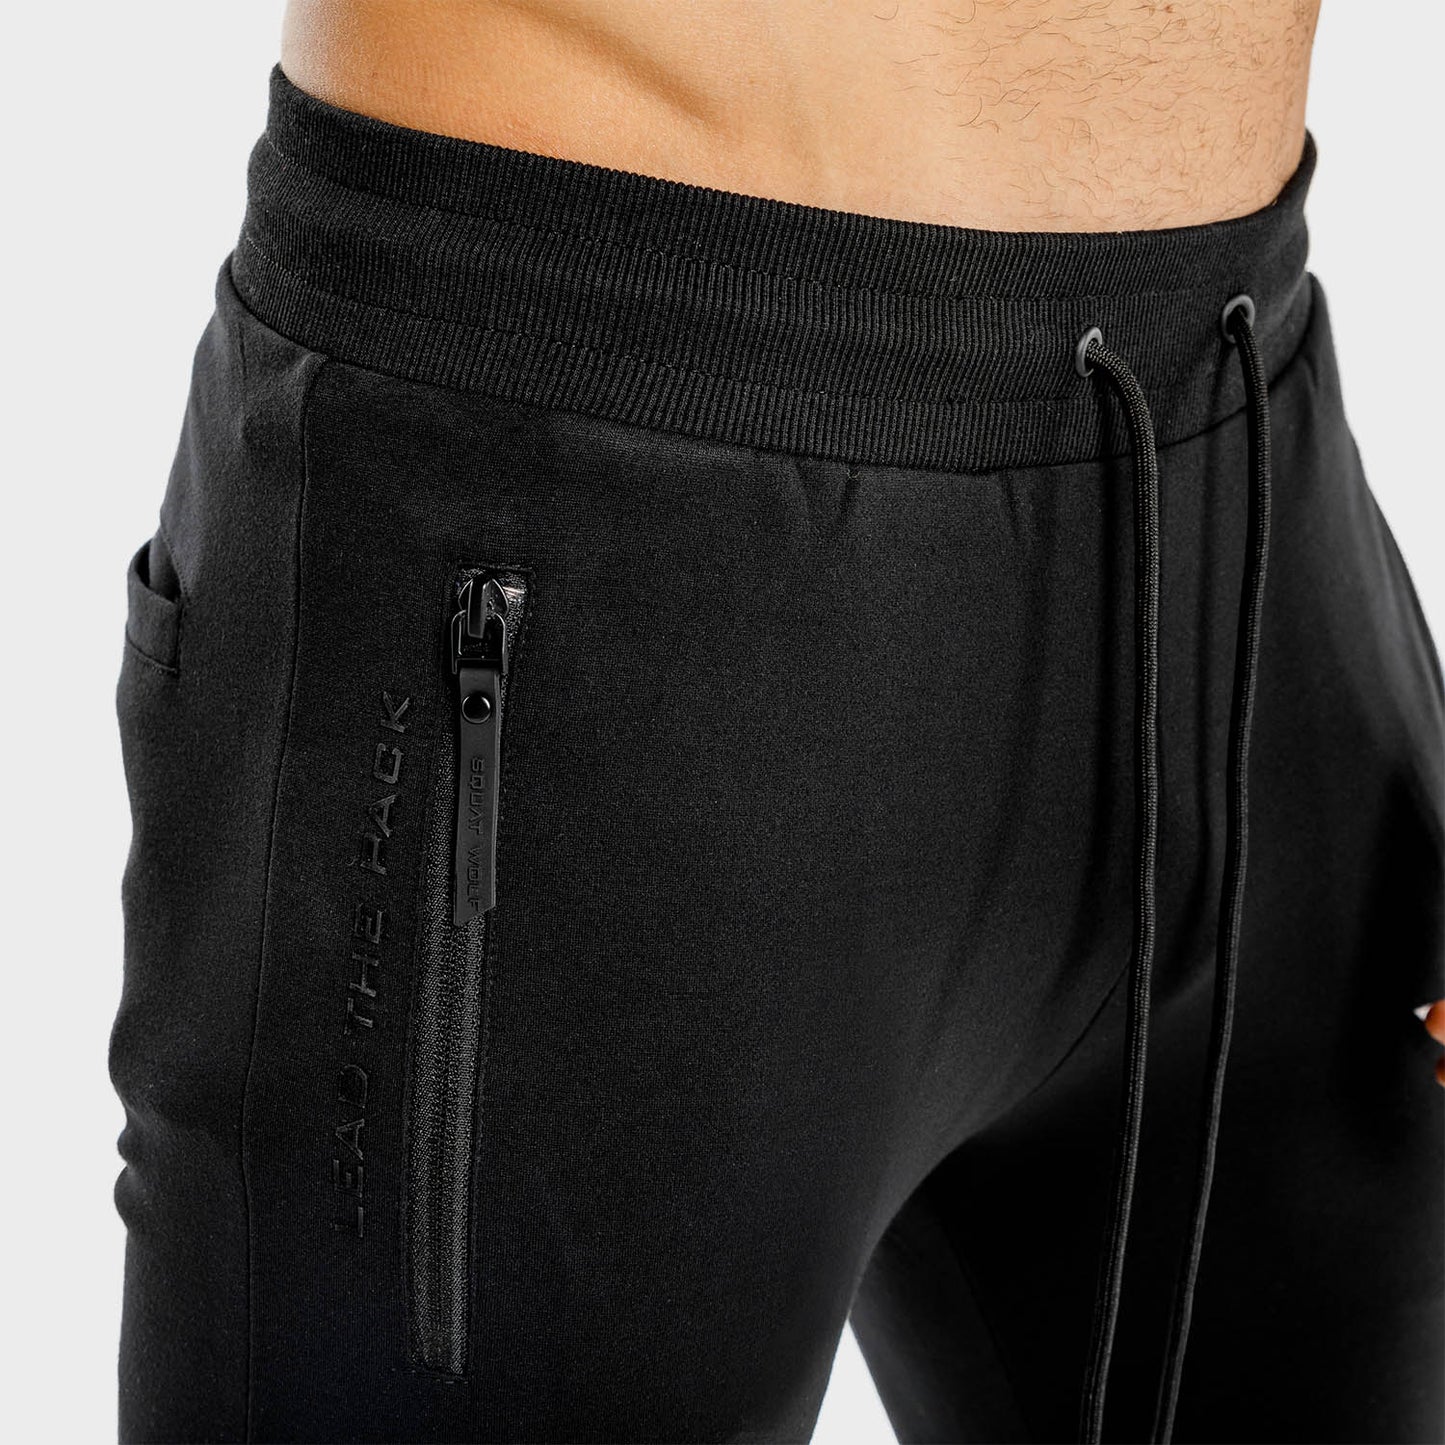 squatwolf-gym-wear-statement-classic-joggers-black-workout-pants-for-men